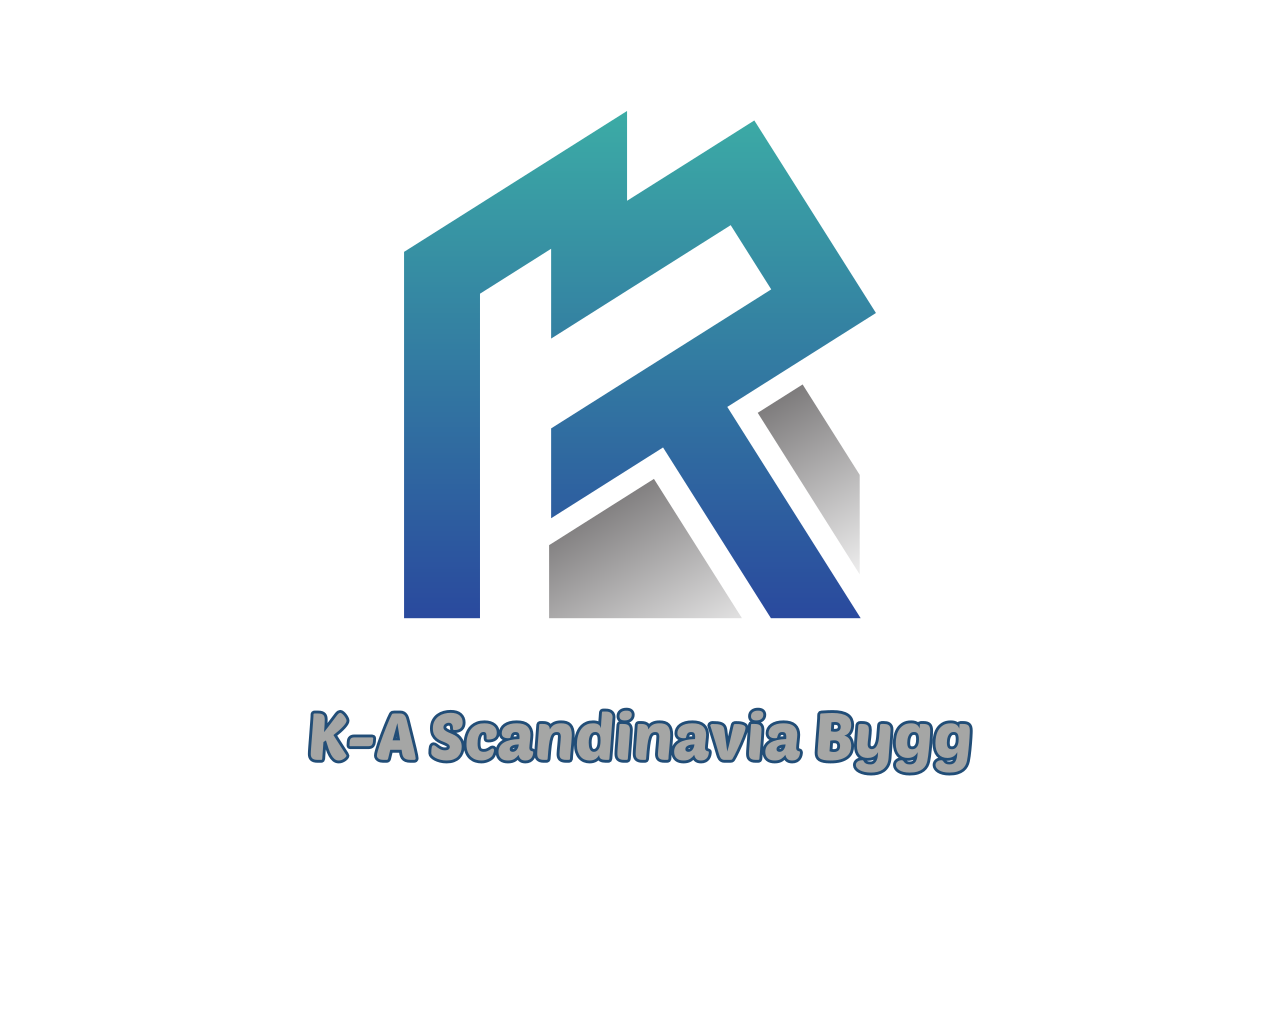 K-A Scandinavia Bygg